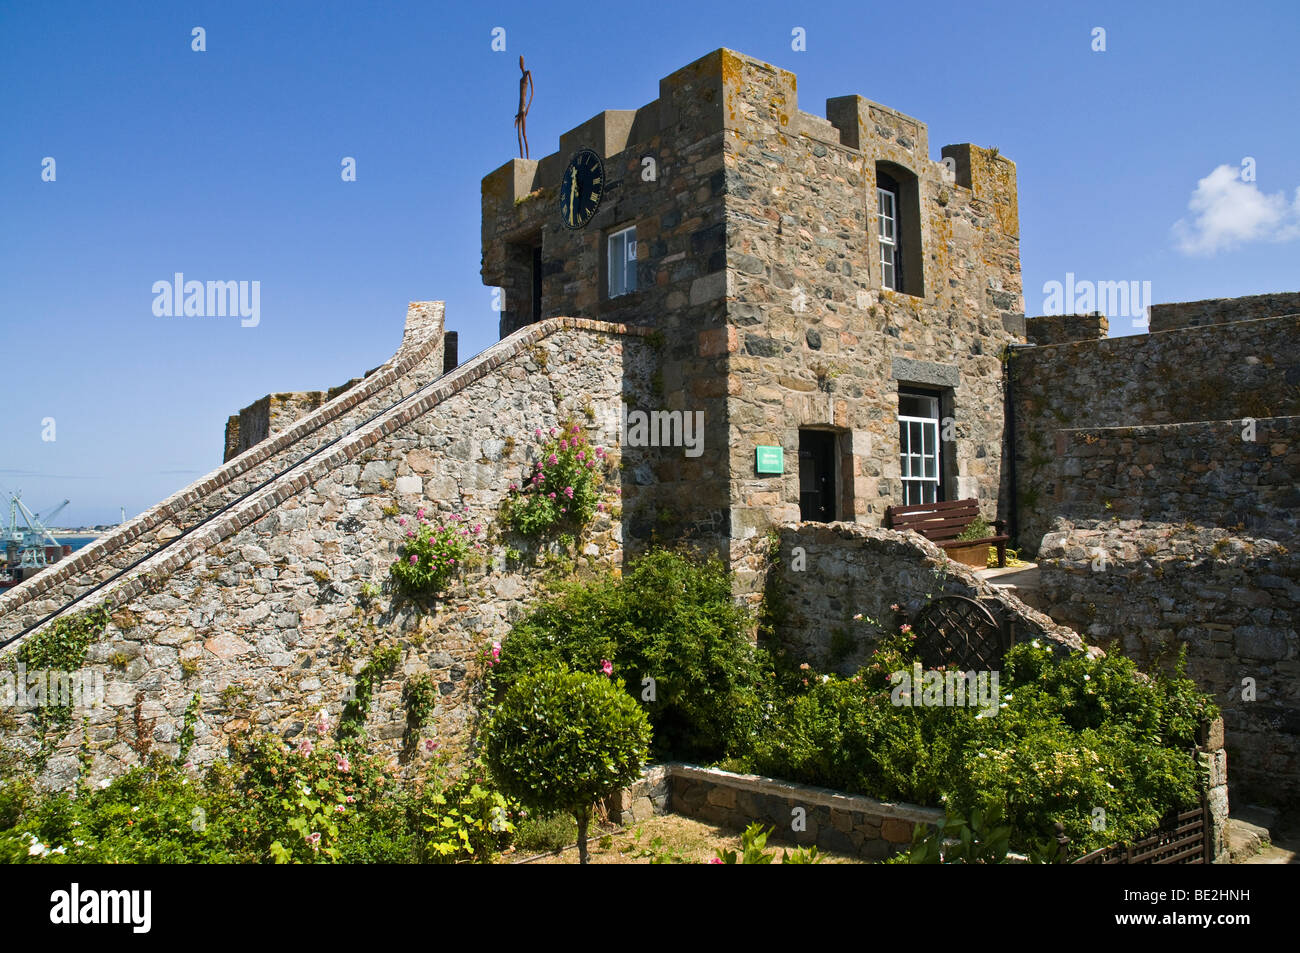 Dh Castle Cornet St Peter Port Guernsey Schlossgarten und Uhrturm Festung Burgen Stockfoto